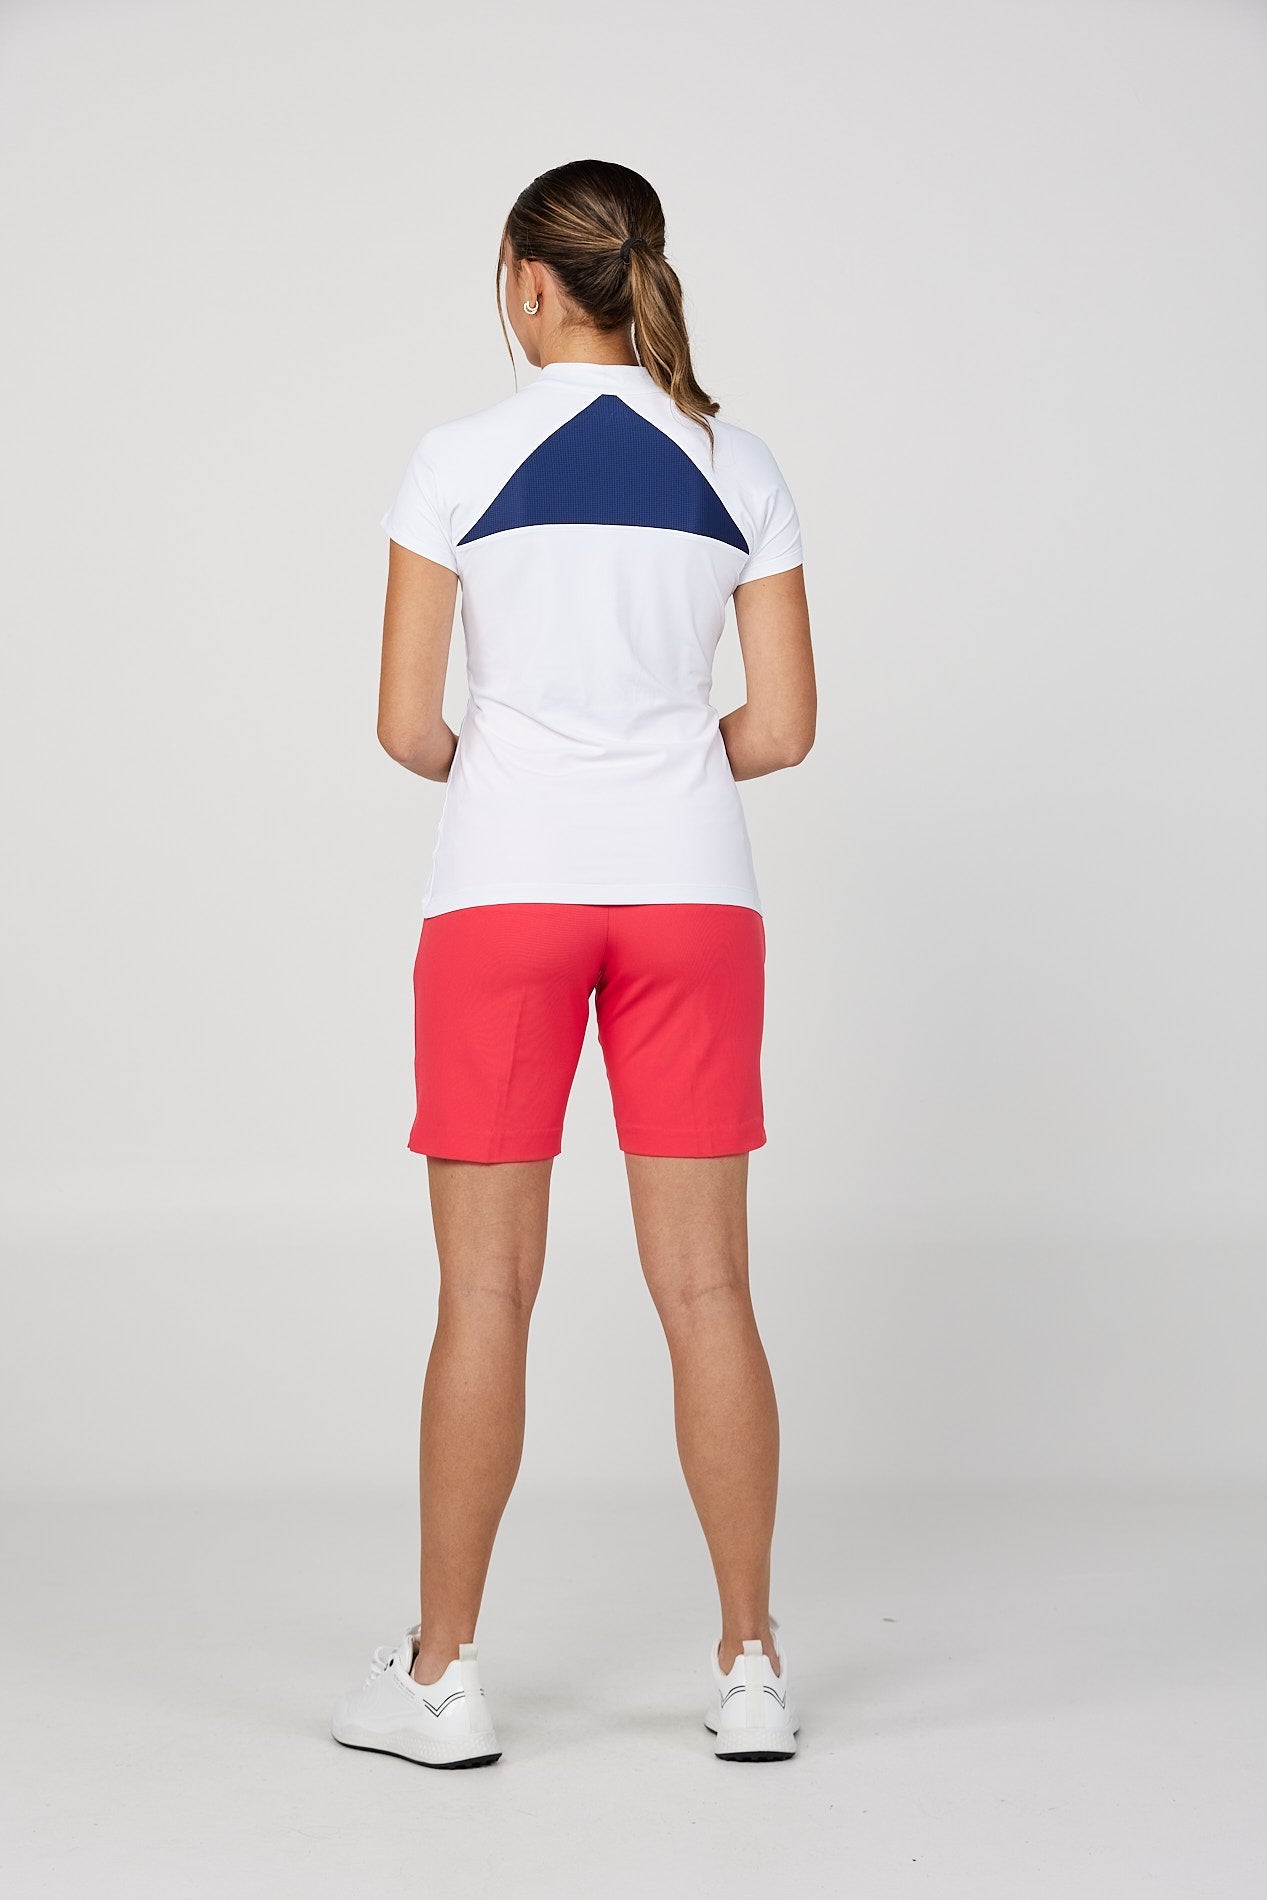 Women's White Raglan Golf Short Sleeve Zipper Top by Sofibella, view of back